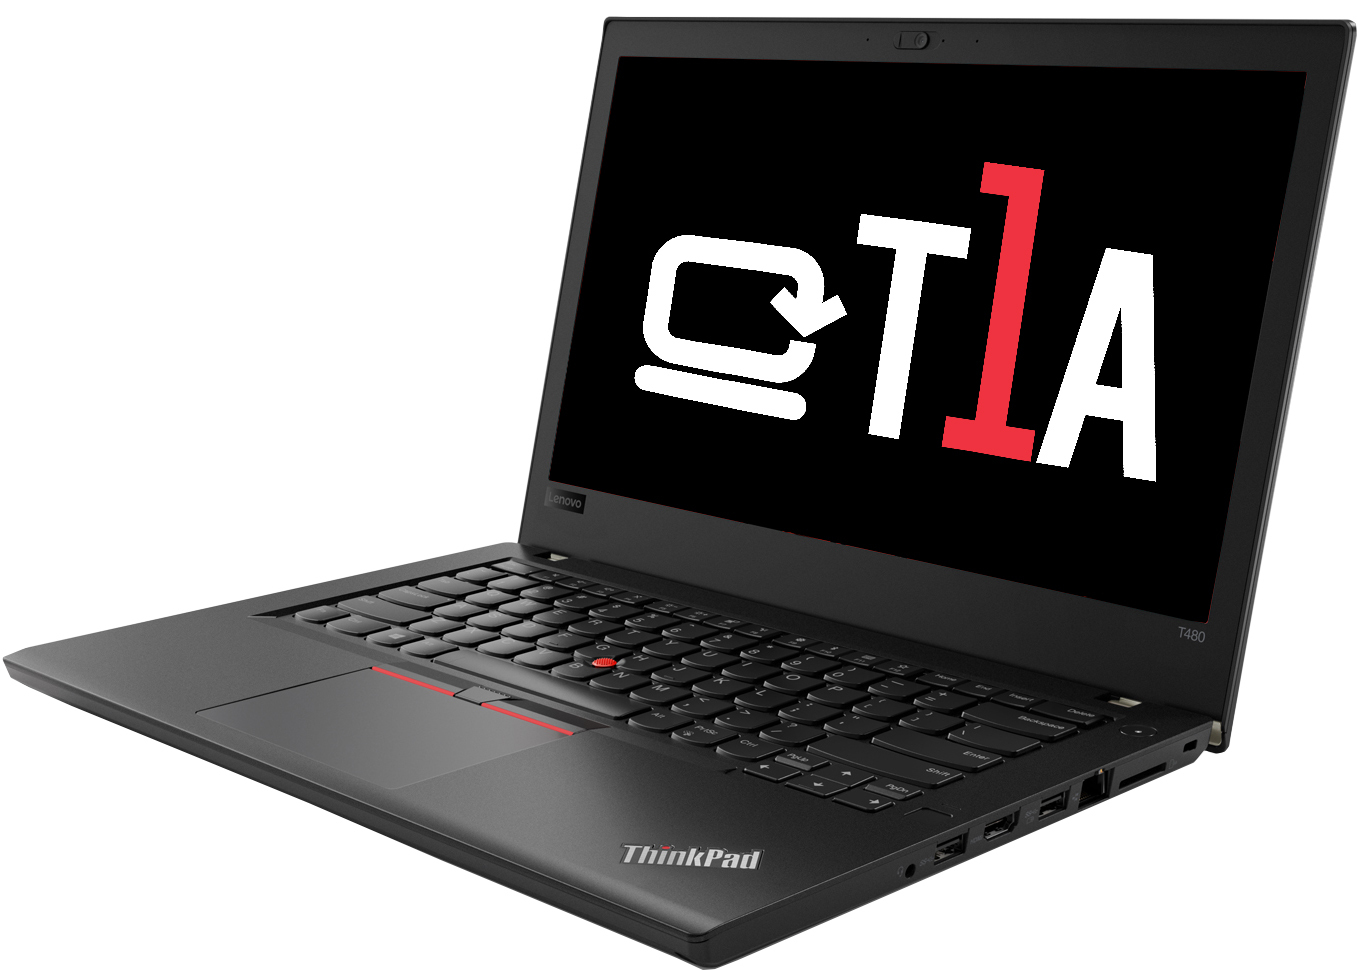 Tier1 Asset Lenovo ThinkPad T480 14 I5-8350U 8GB 240GB Intel UHD Graphics 620 Windows 10 Pro - Core i5 Mobile